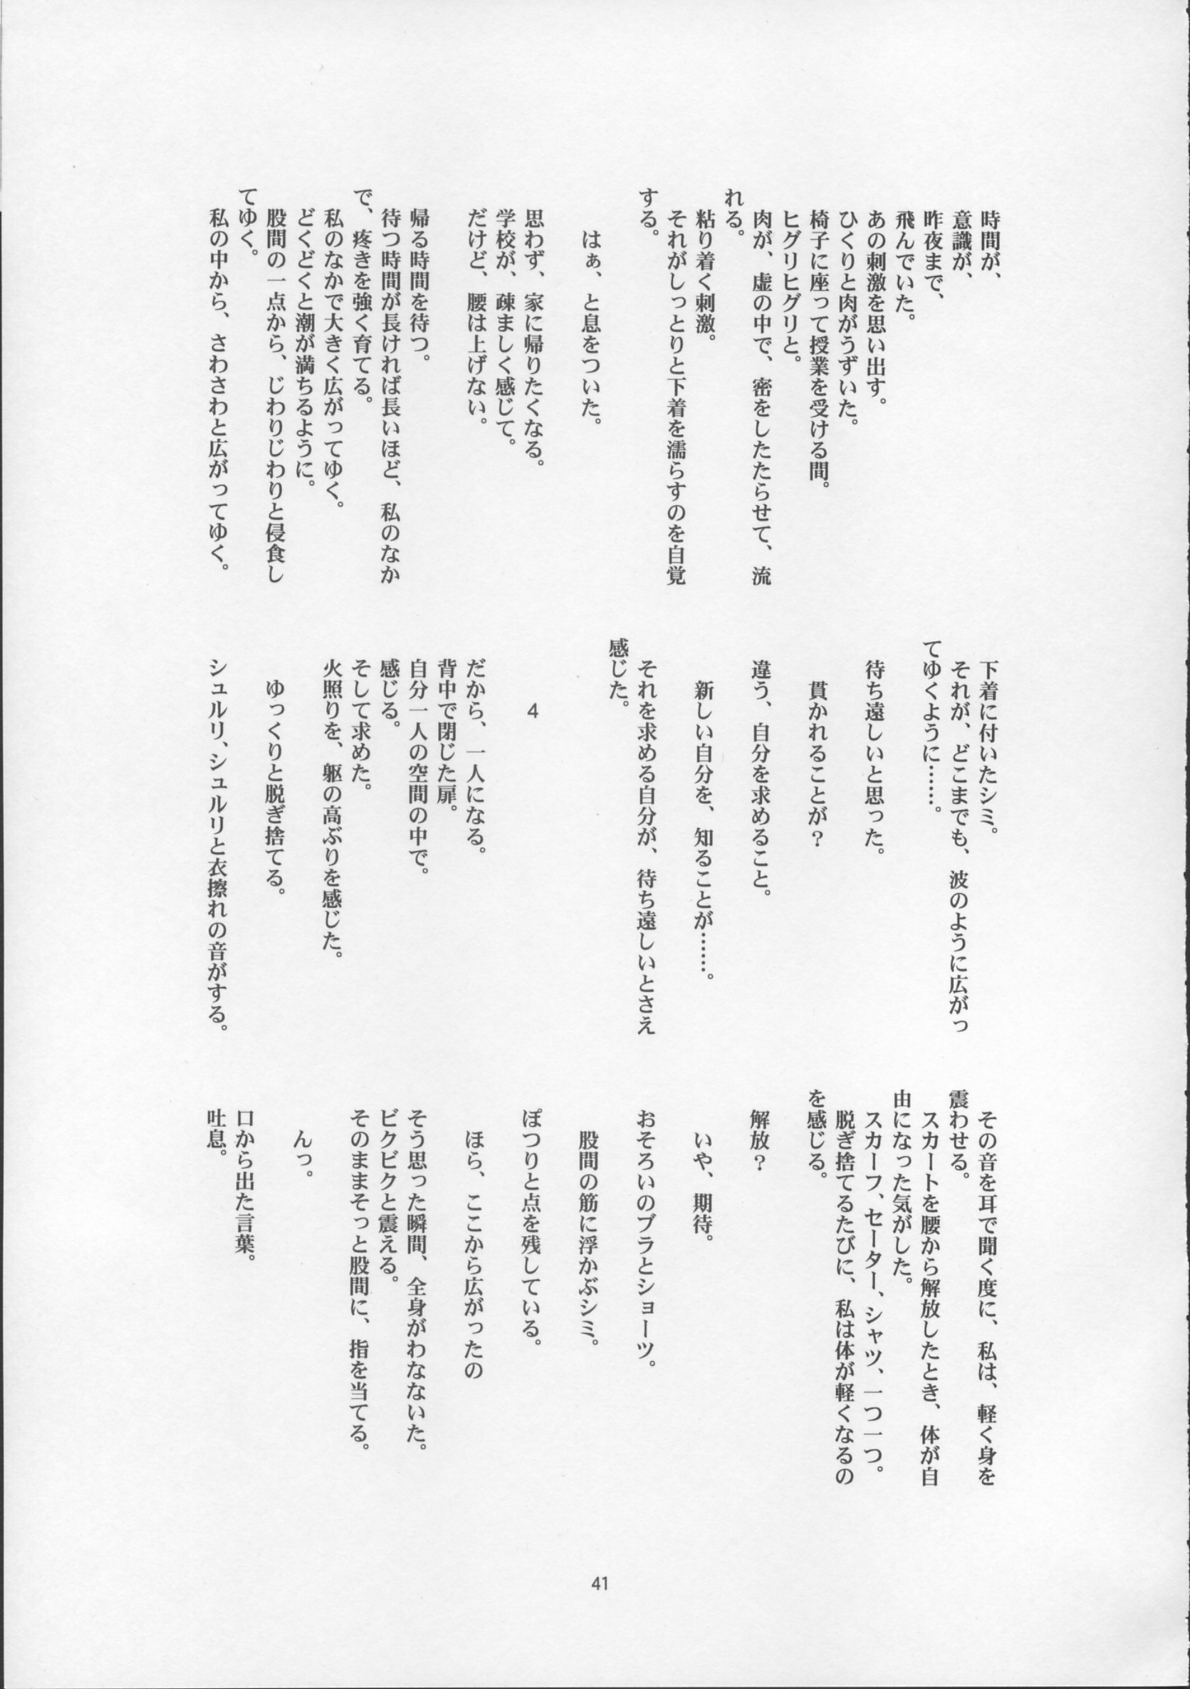 [JIBAKU-SYSTEM (涼樹天晴)] お願い生徒会長様「苺」 (おねがい☆ツインズ) [2005年4月10日]